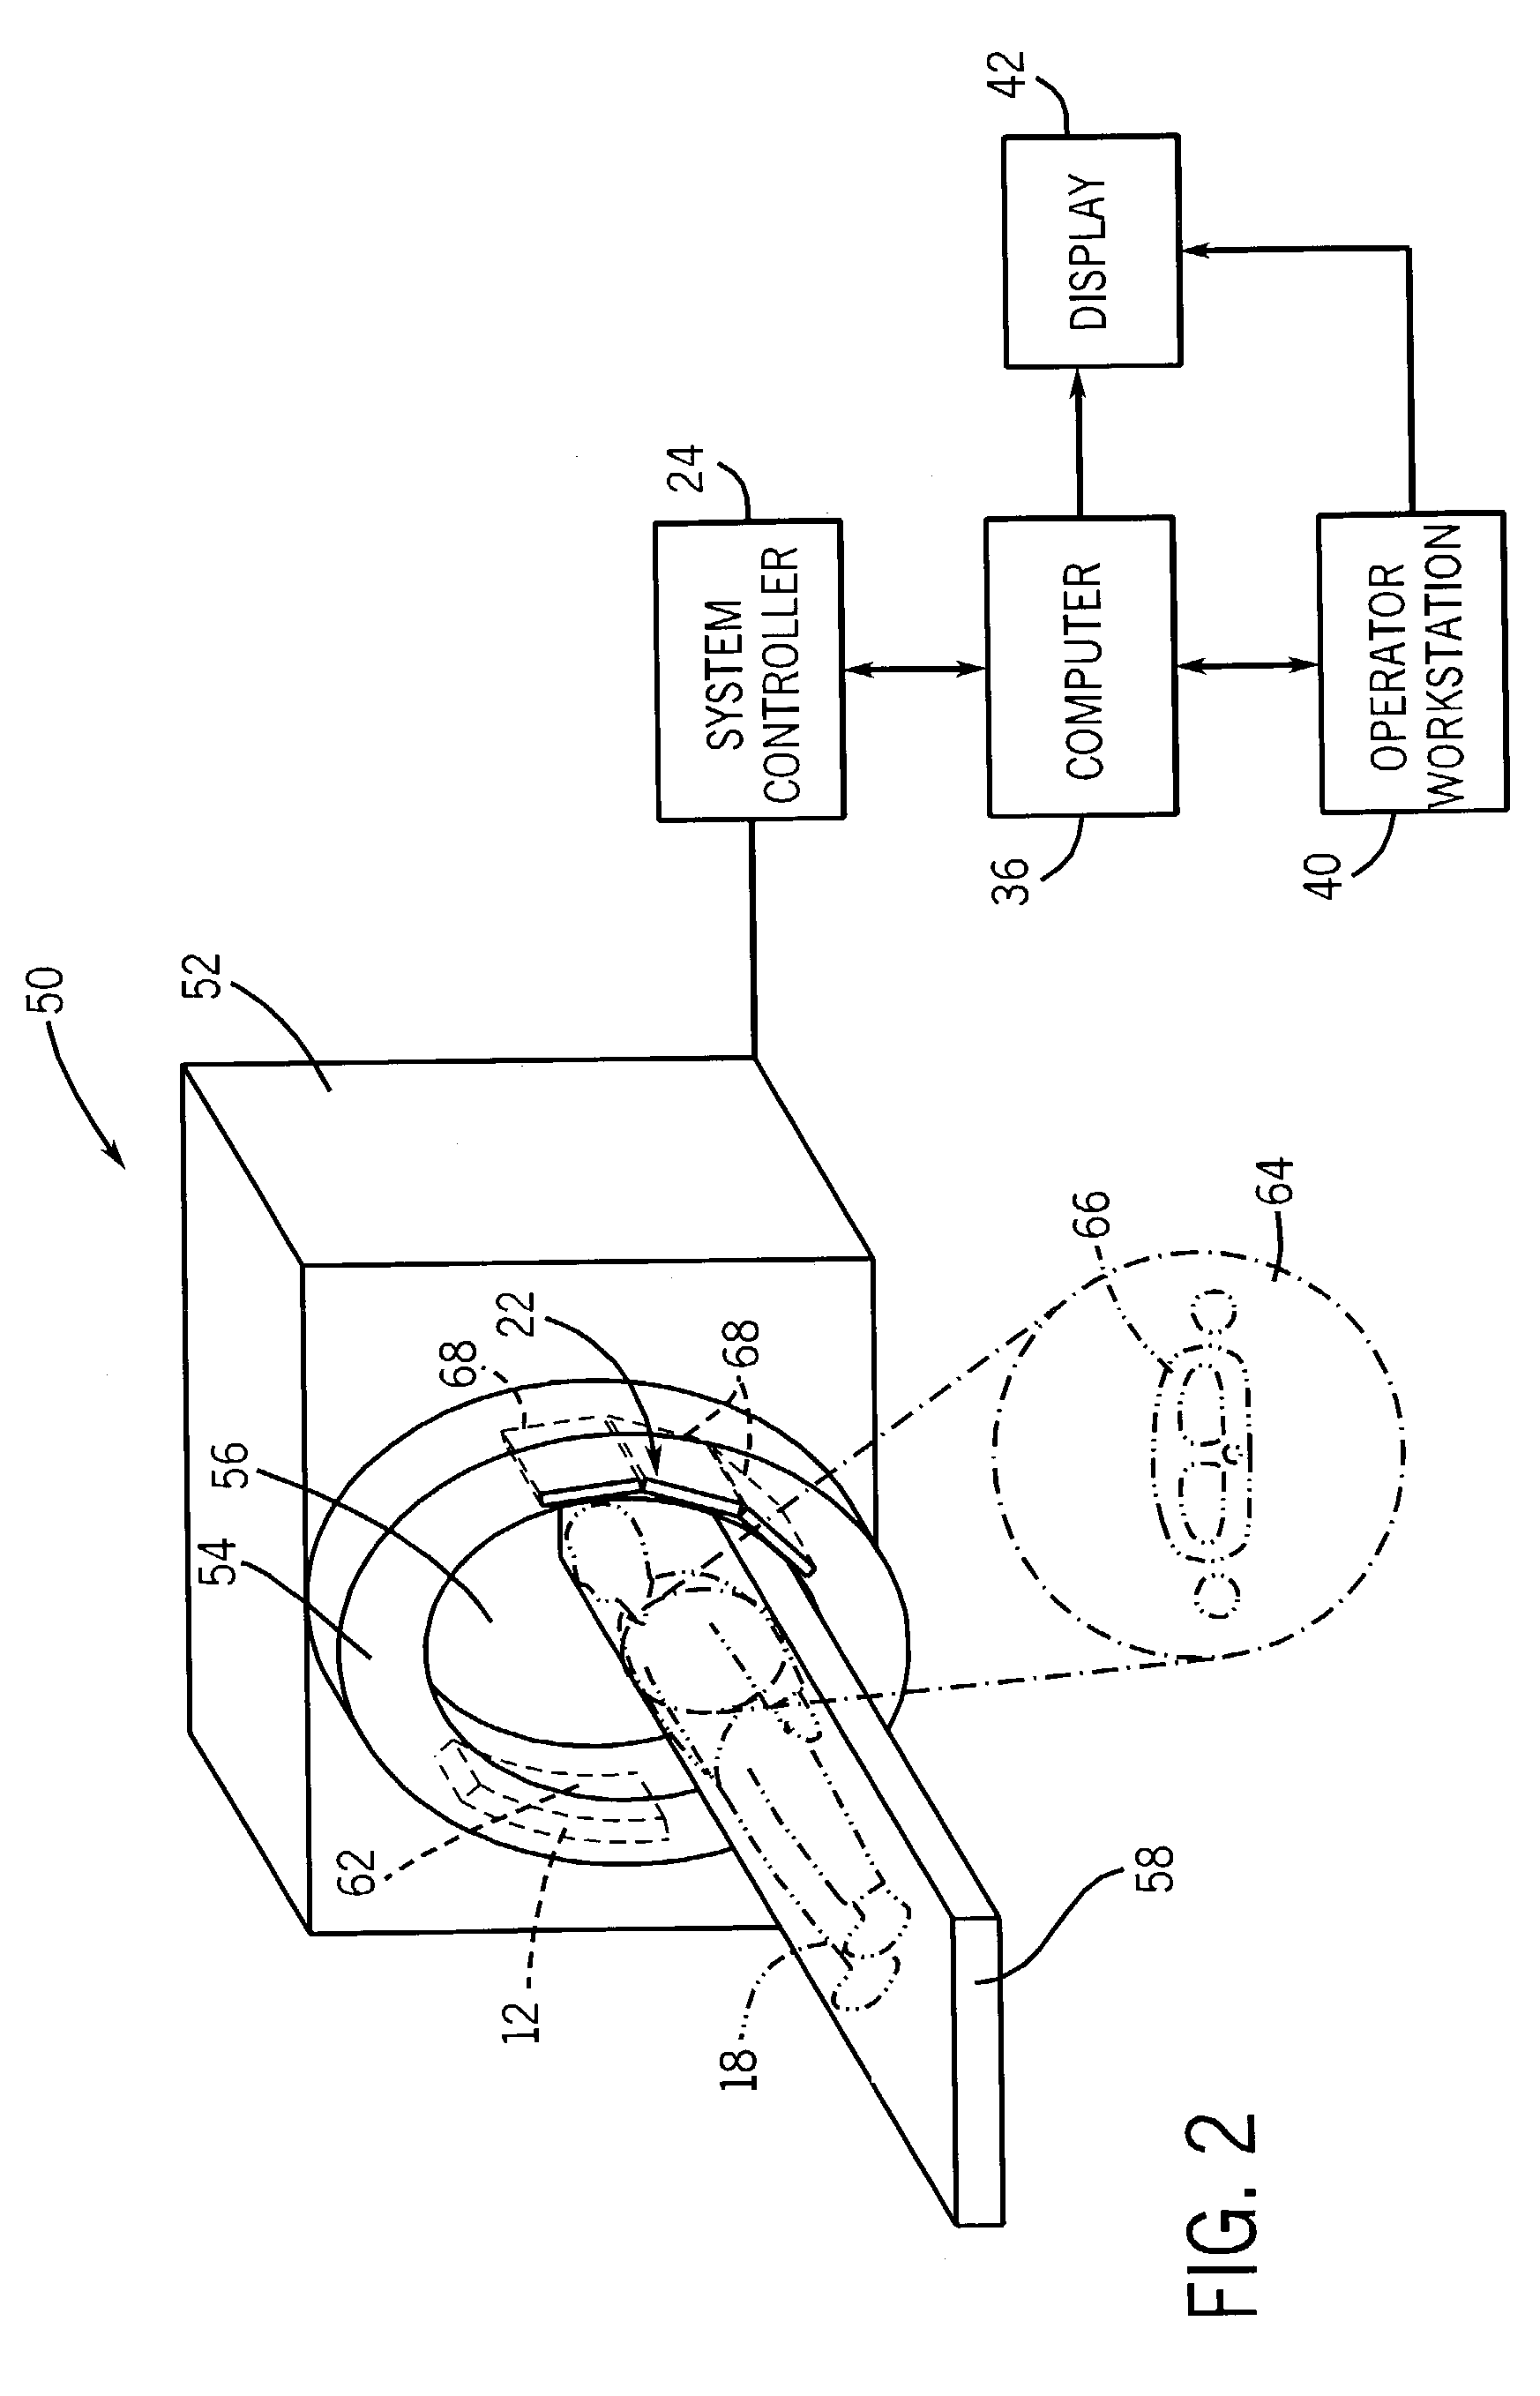 Volumetric CT system and method utilizing multiple detector panels